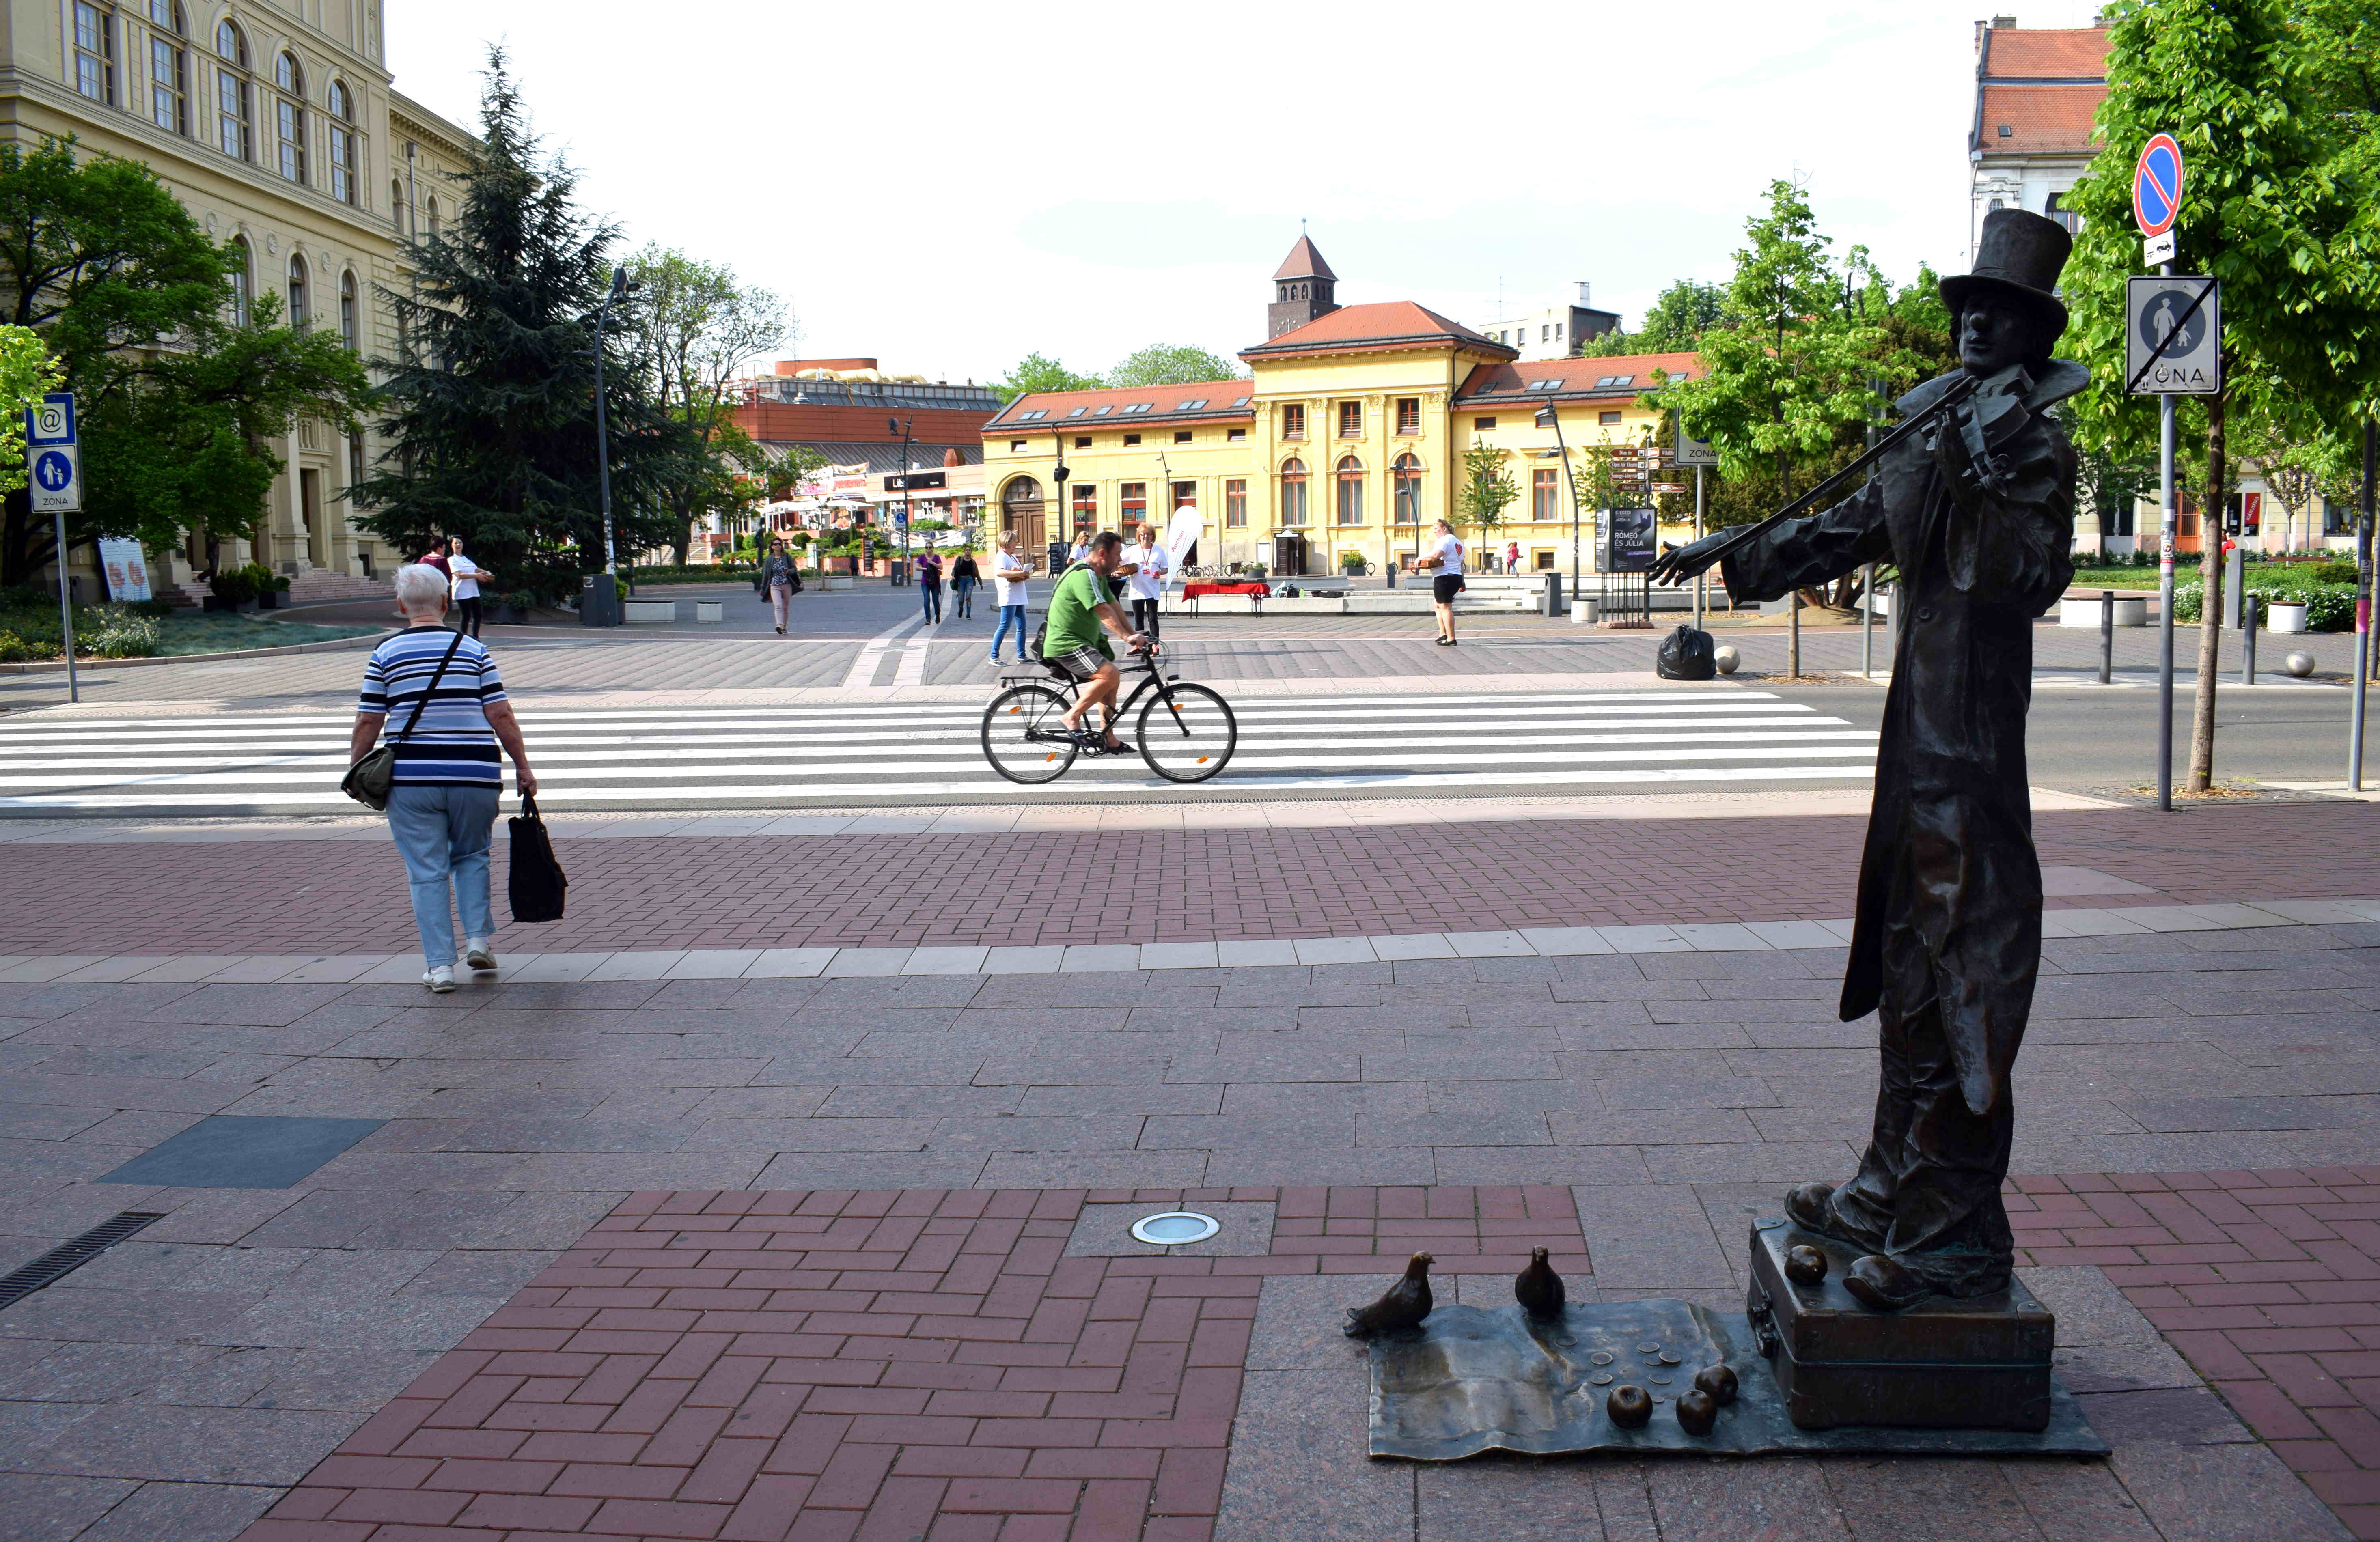 Szeged, Hungary City Center